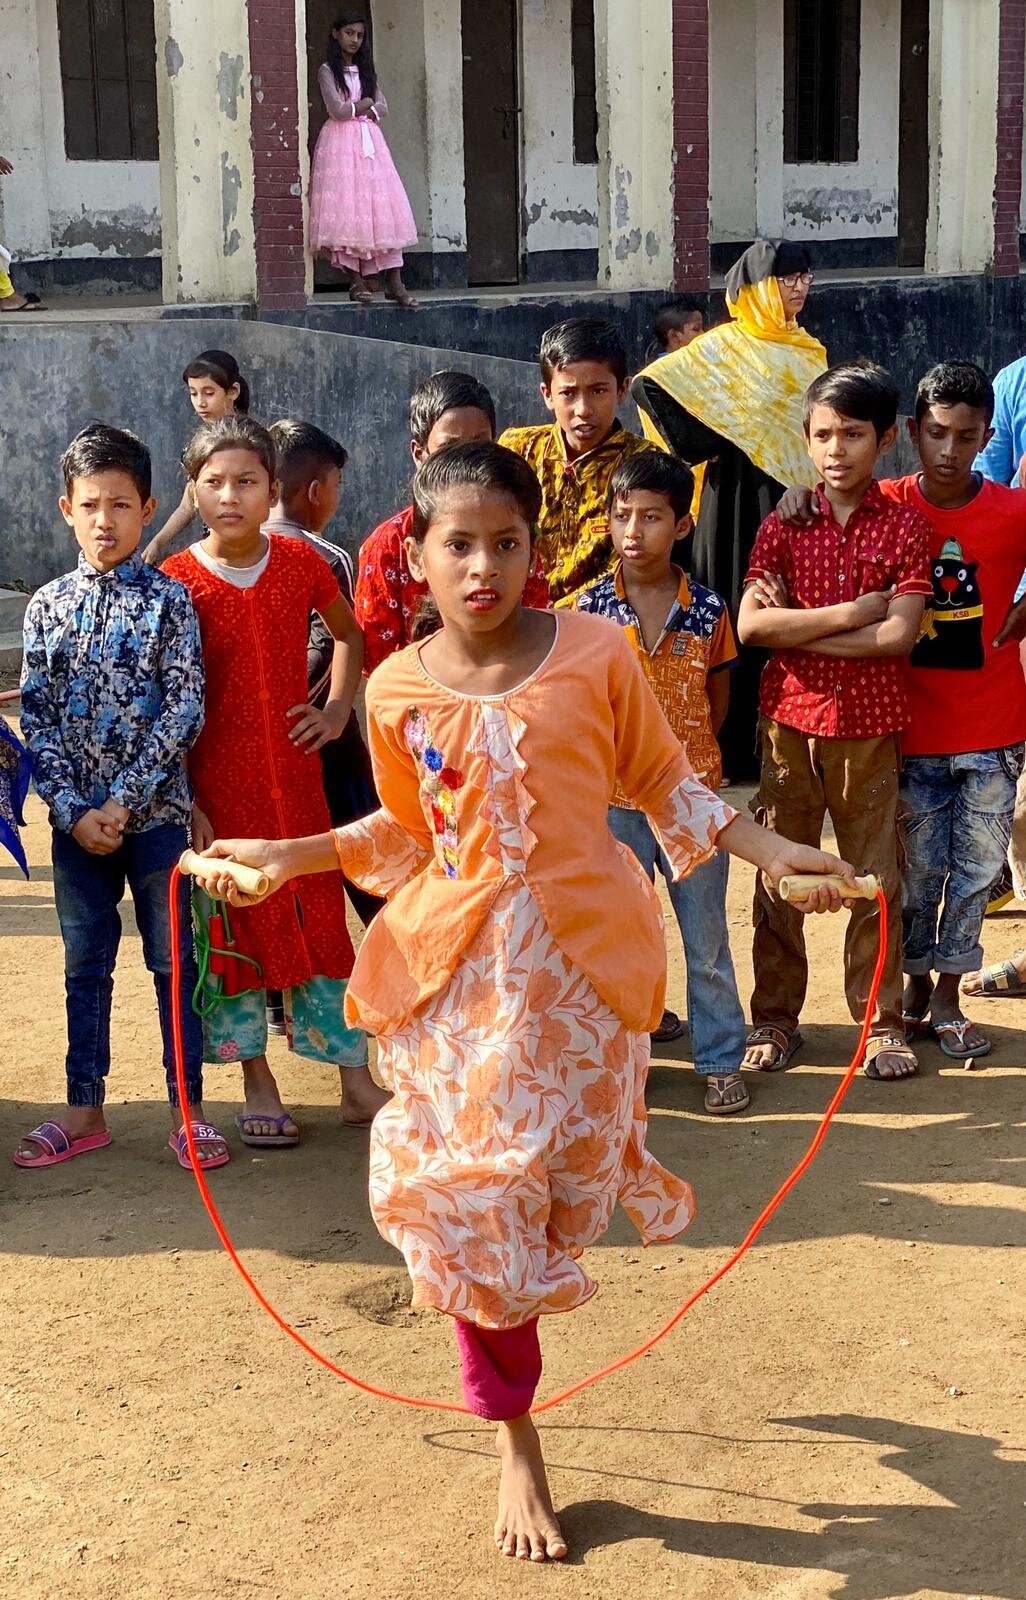 A sports field for school children in Bangladesh